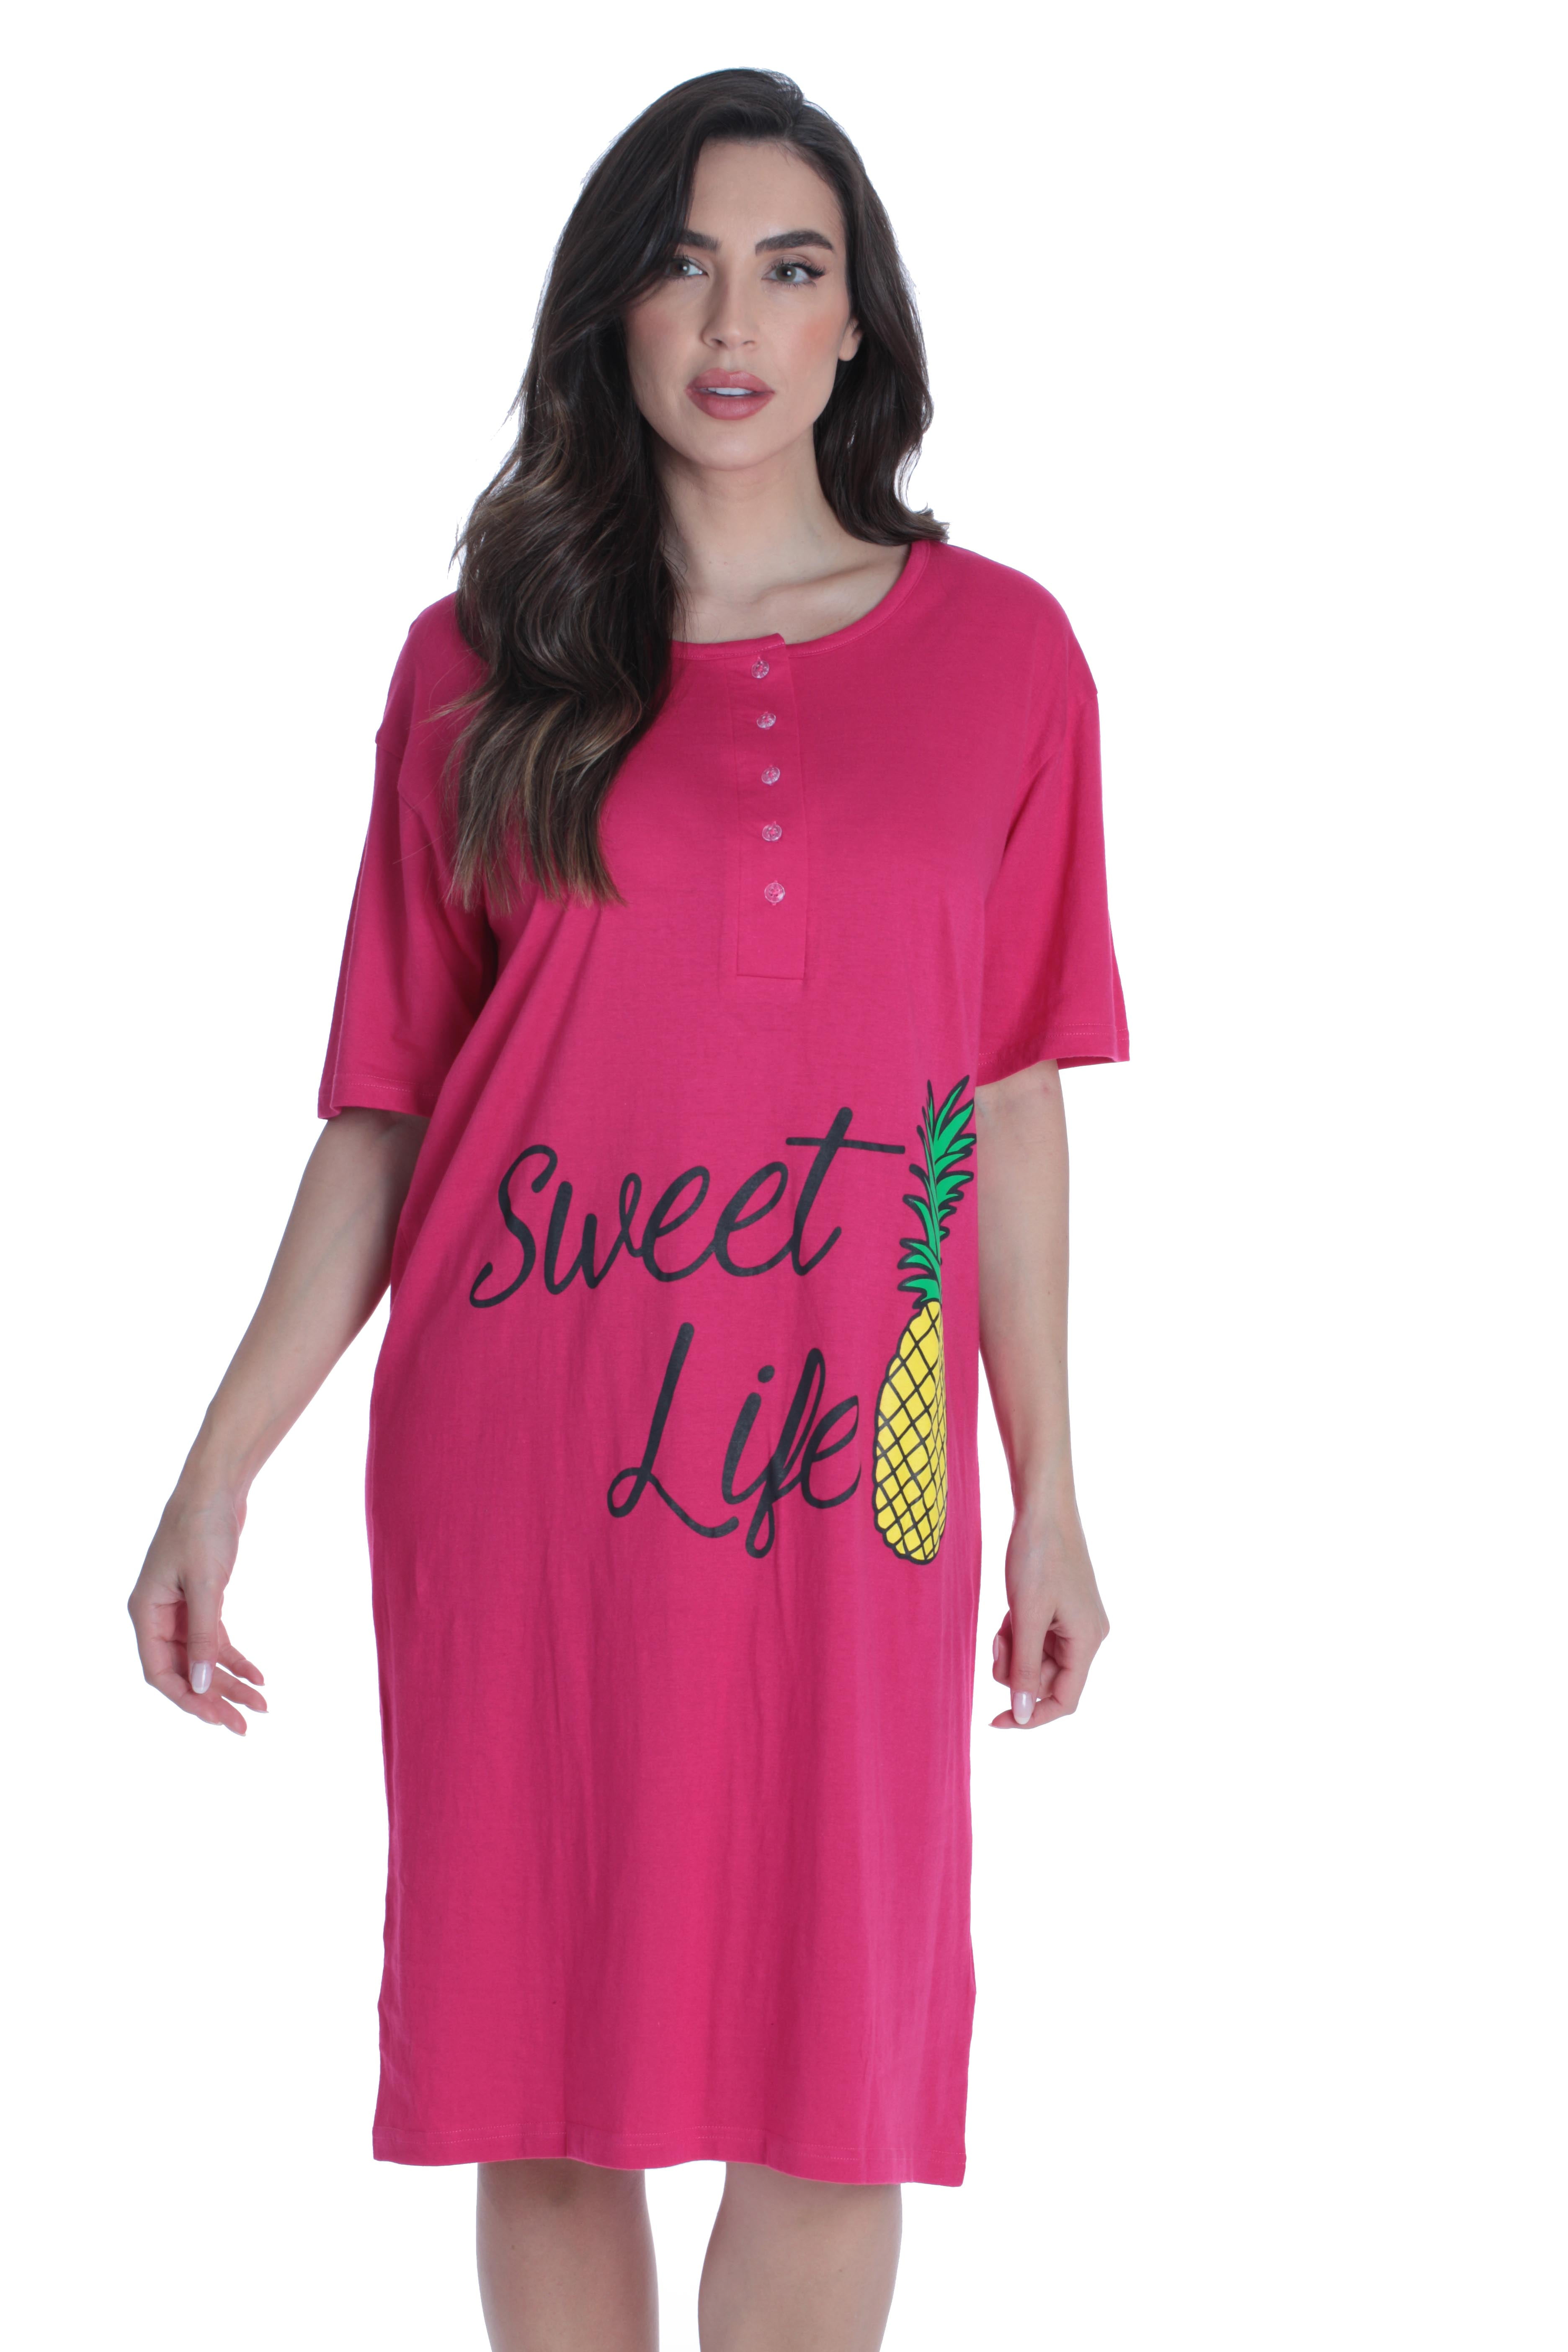 NWT Nursing Shirt XXL 2XL Pumping Access Cap Sleeve Romantic Floral Pink Lined 